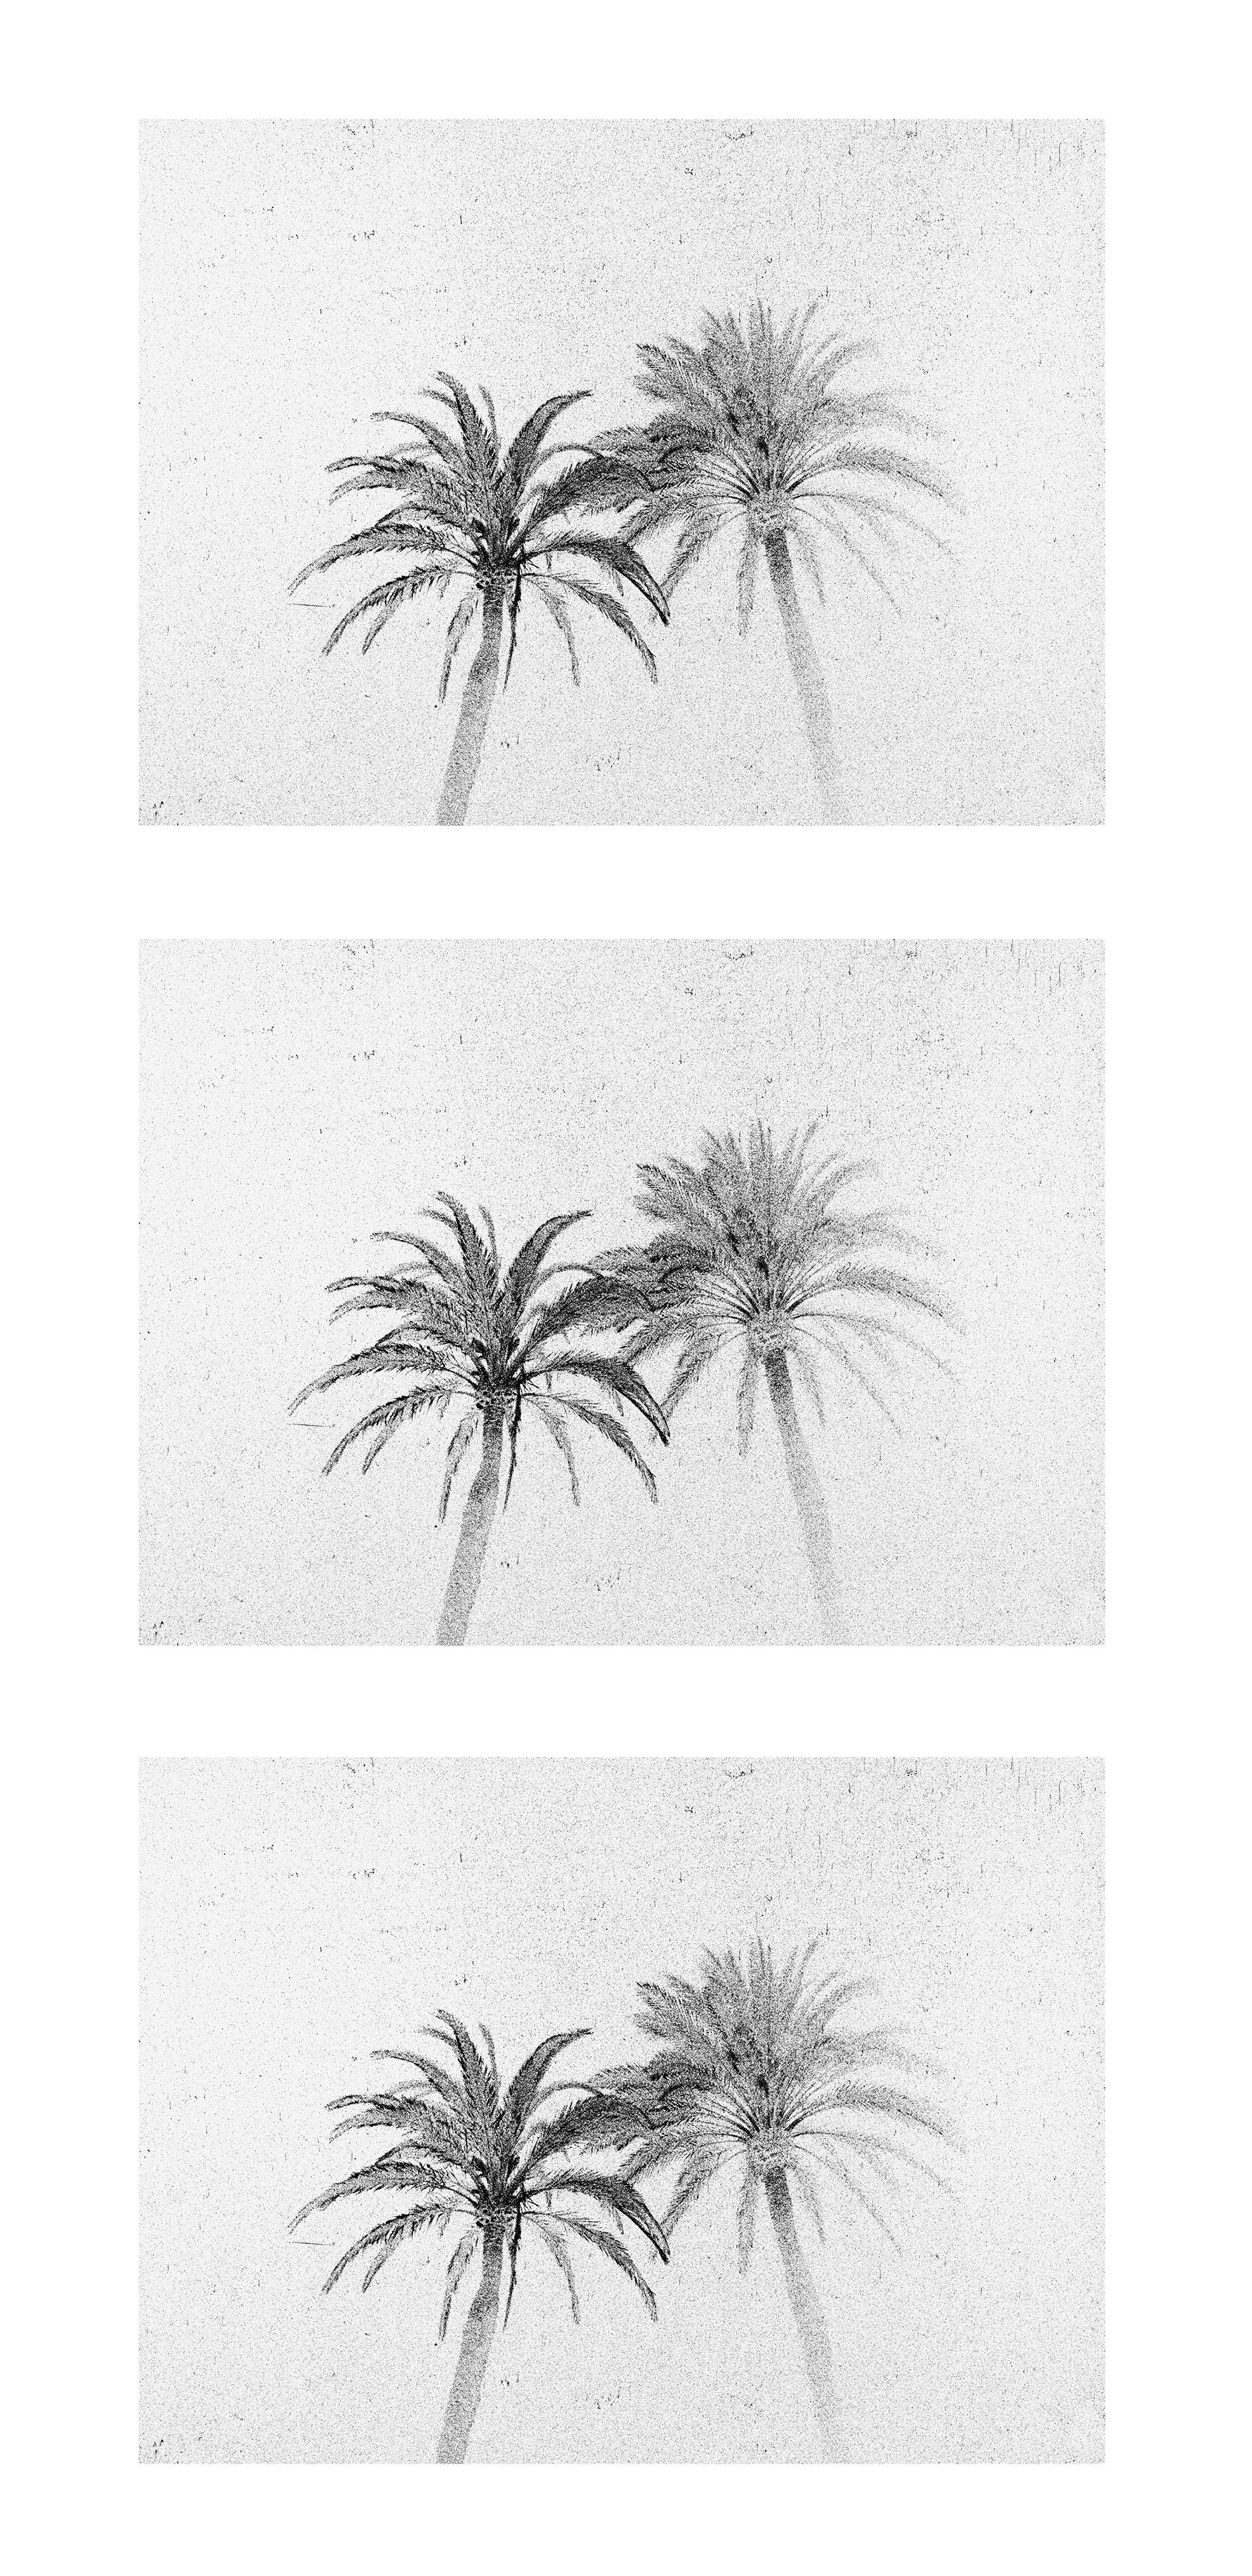 Osheen Harruthoonyan Landscape Photograph - Three Palms-Black and white photo, gelatin silver triptych, palm trees, nature